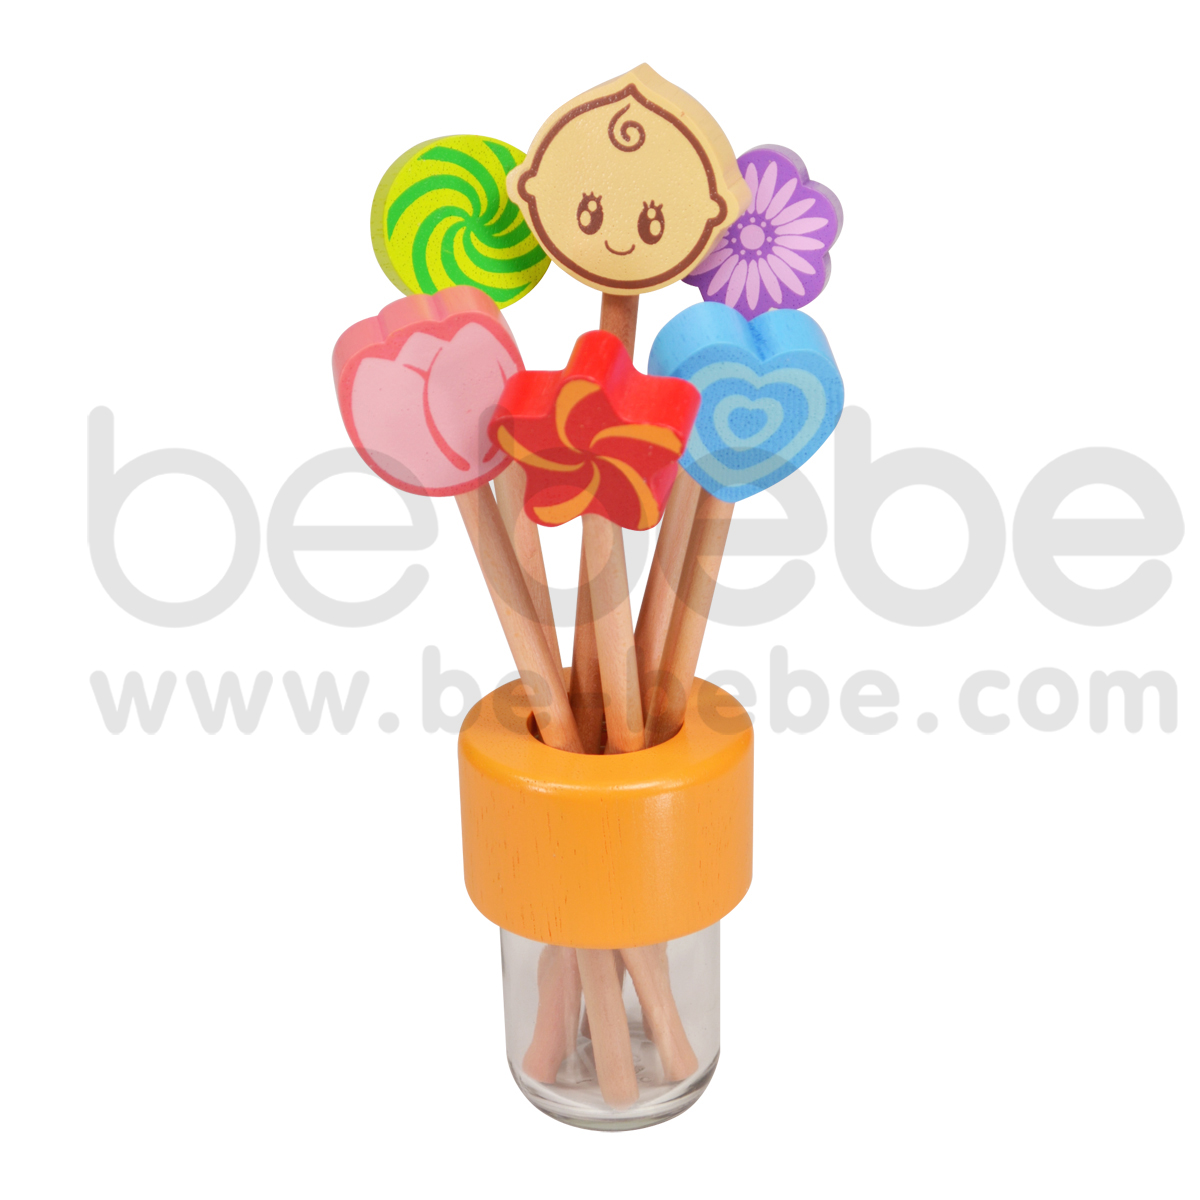 bebebe : Pencil-S-Chrysan.Flower/Yellow